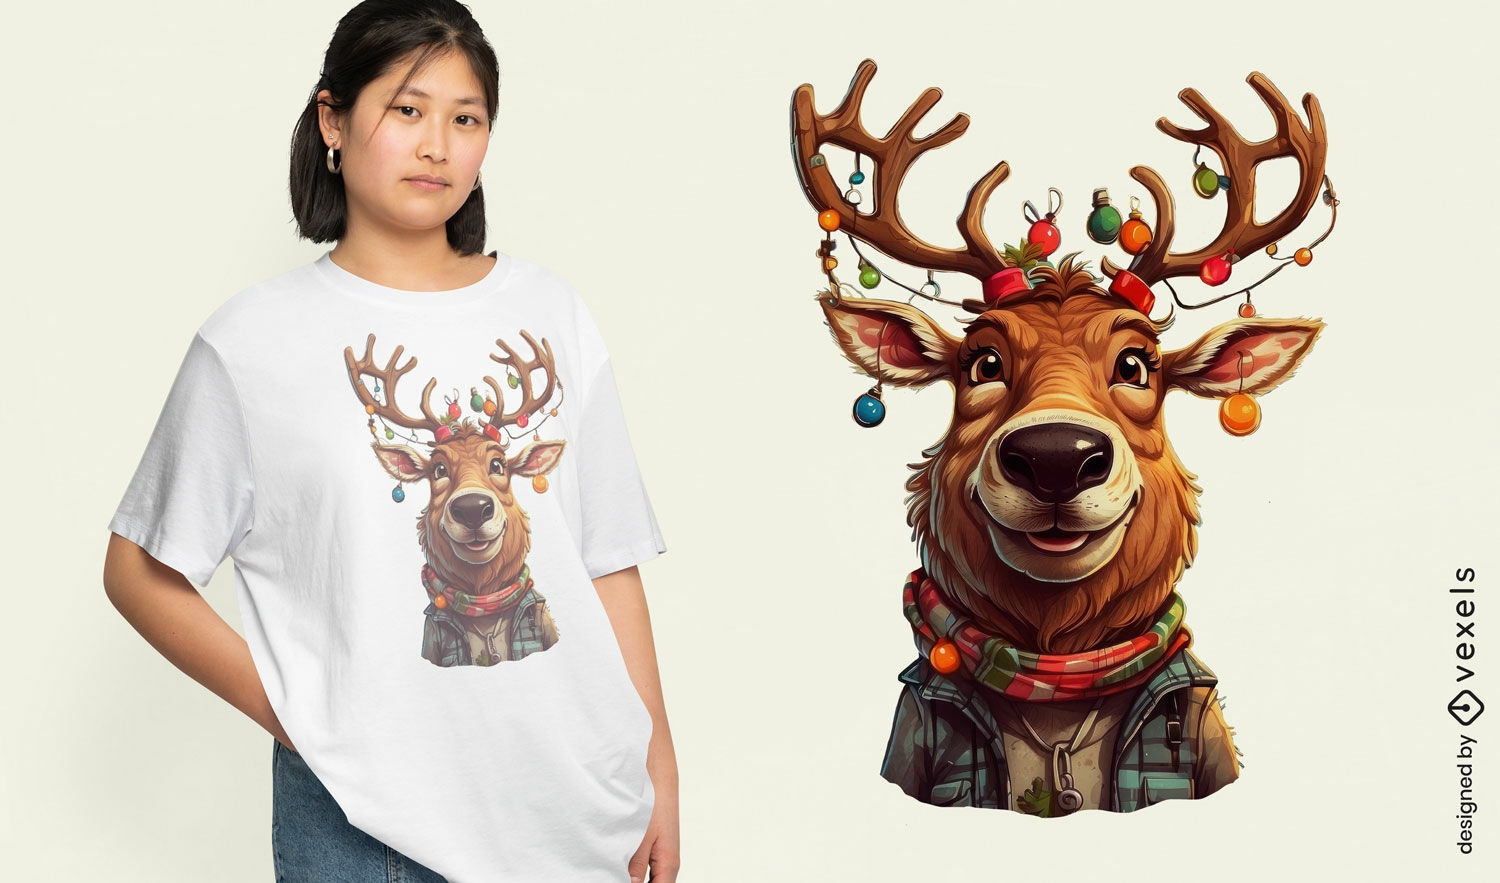 Dise?o de camiseta festiva de renos navide?os.